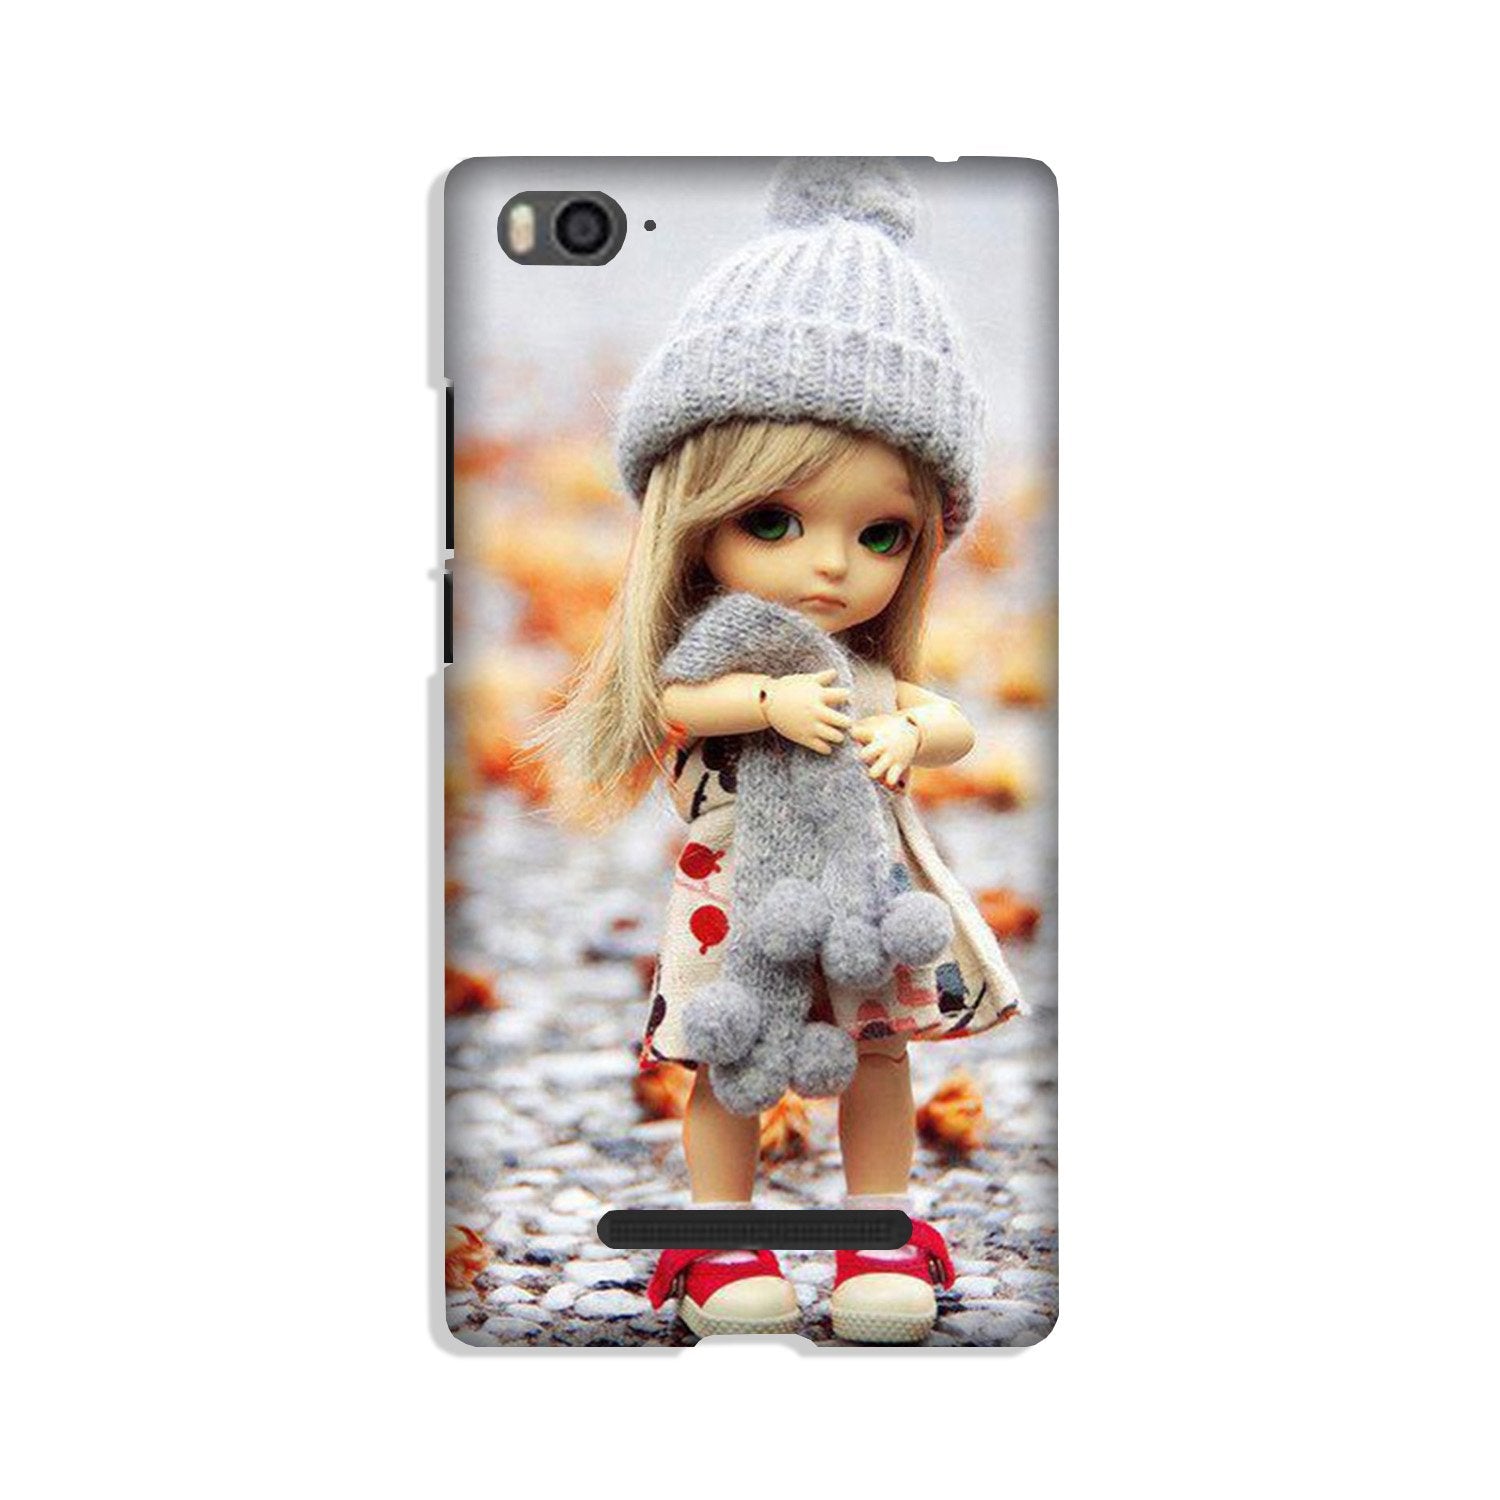 Cute Doll Case for Redmi 4A